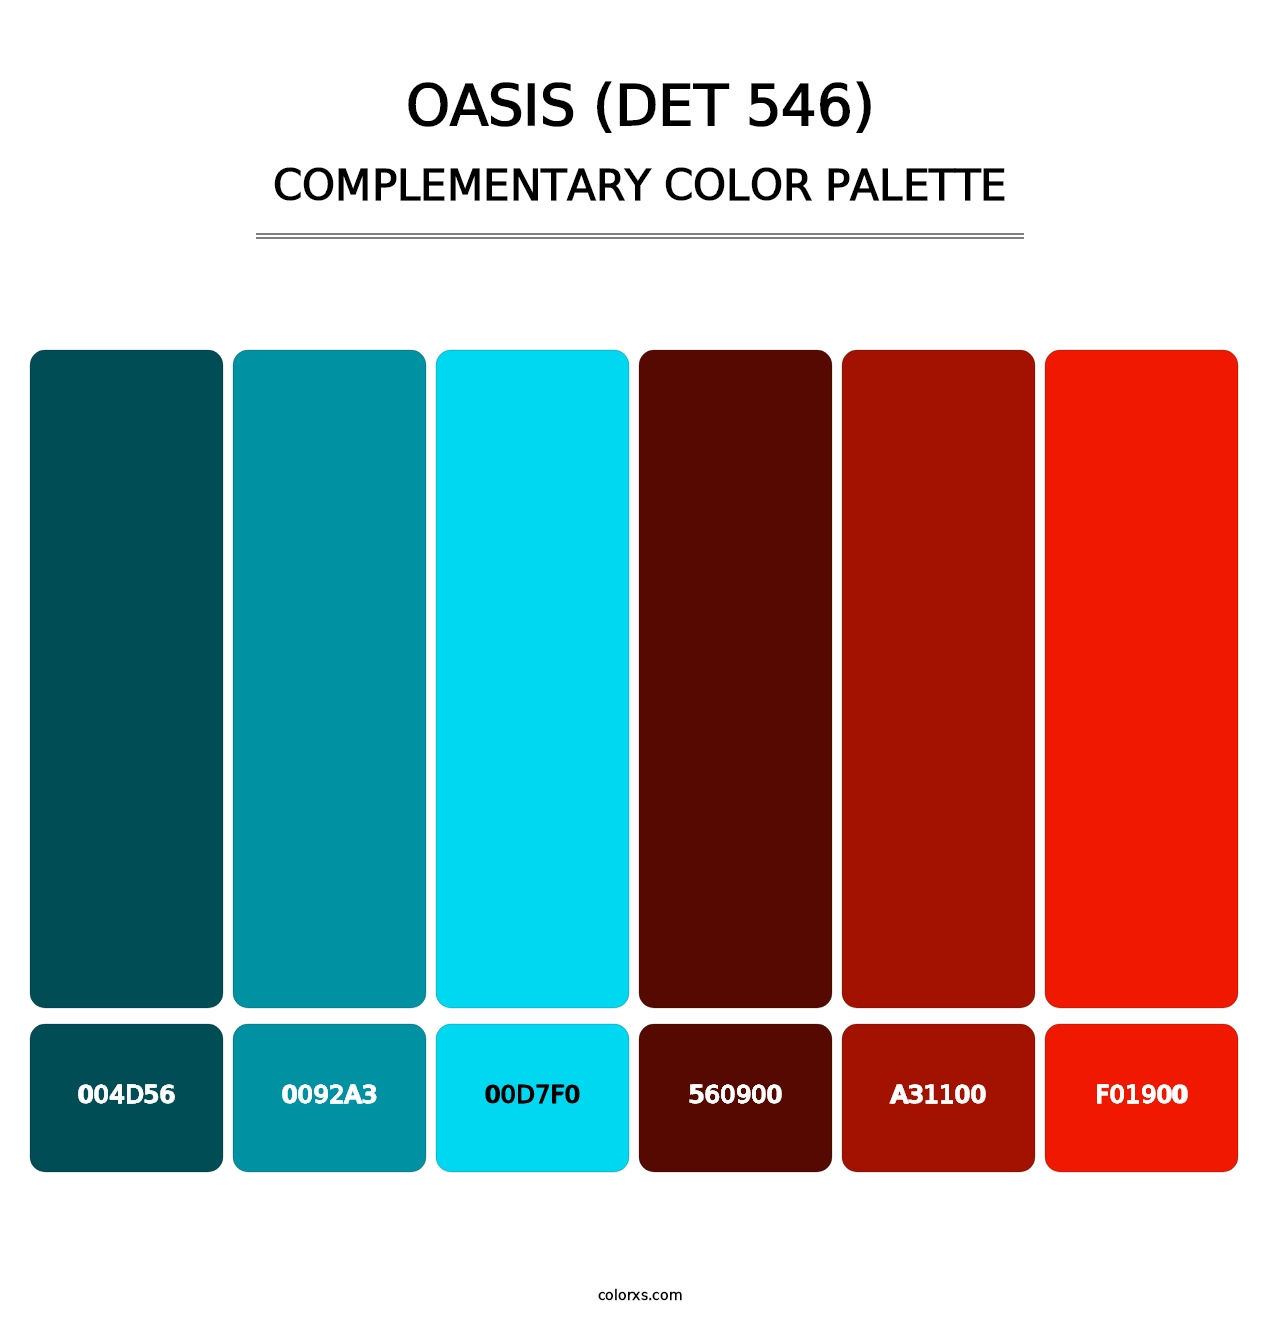 Oasis (DET 546) - Complementary Color Palette